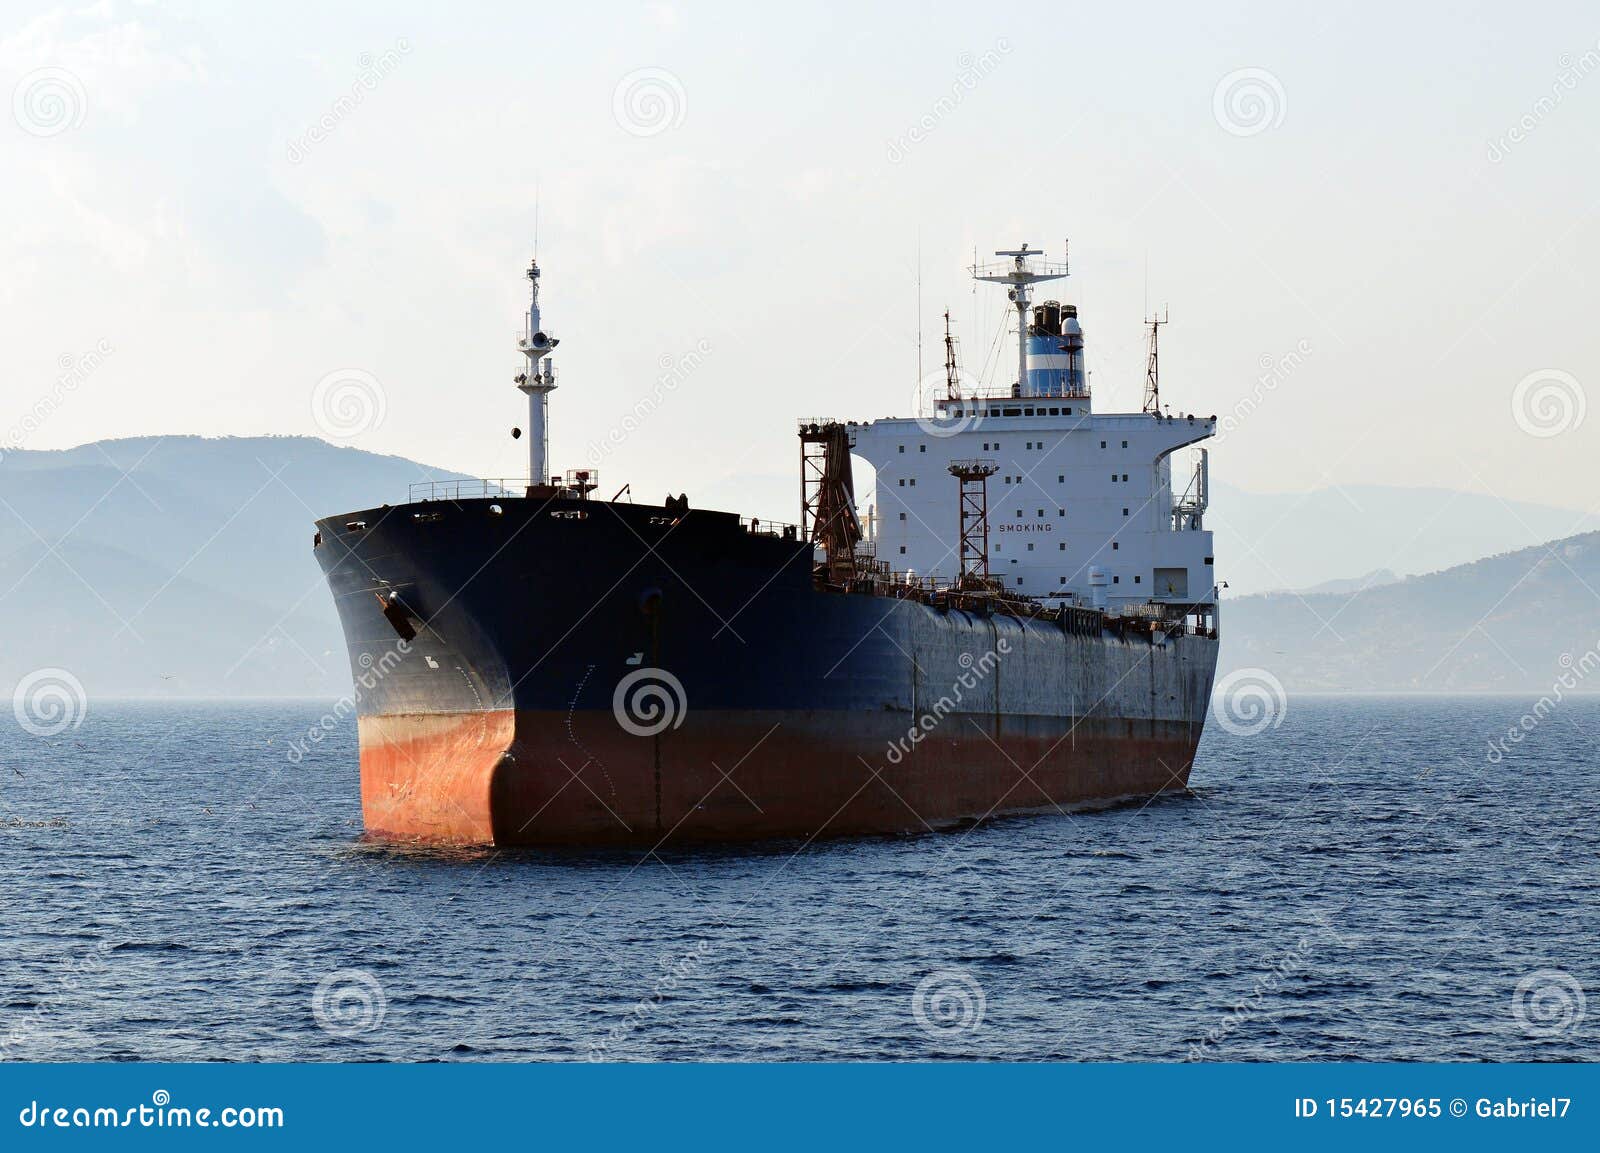 massive cargo ship